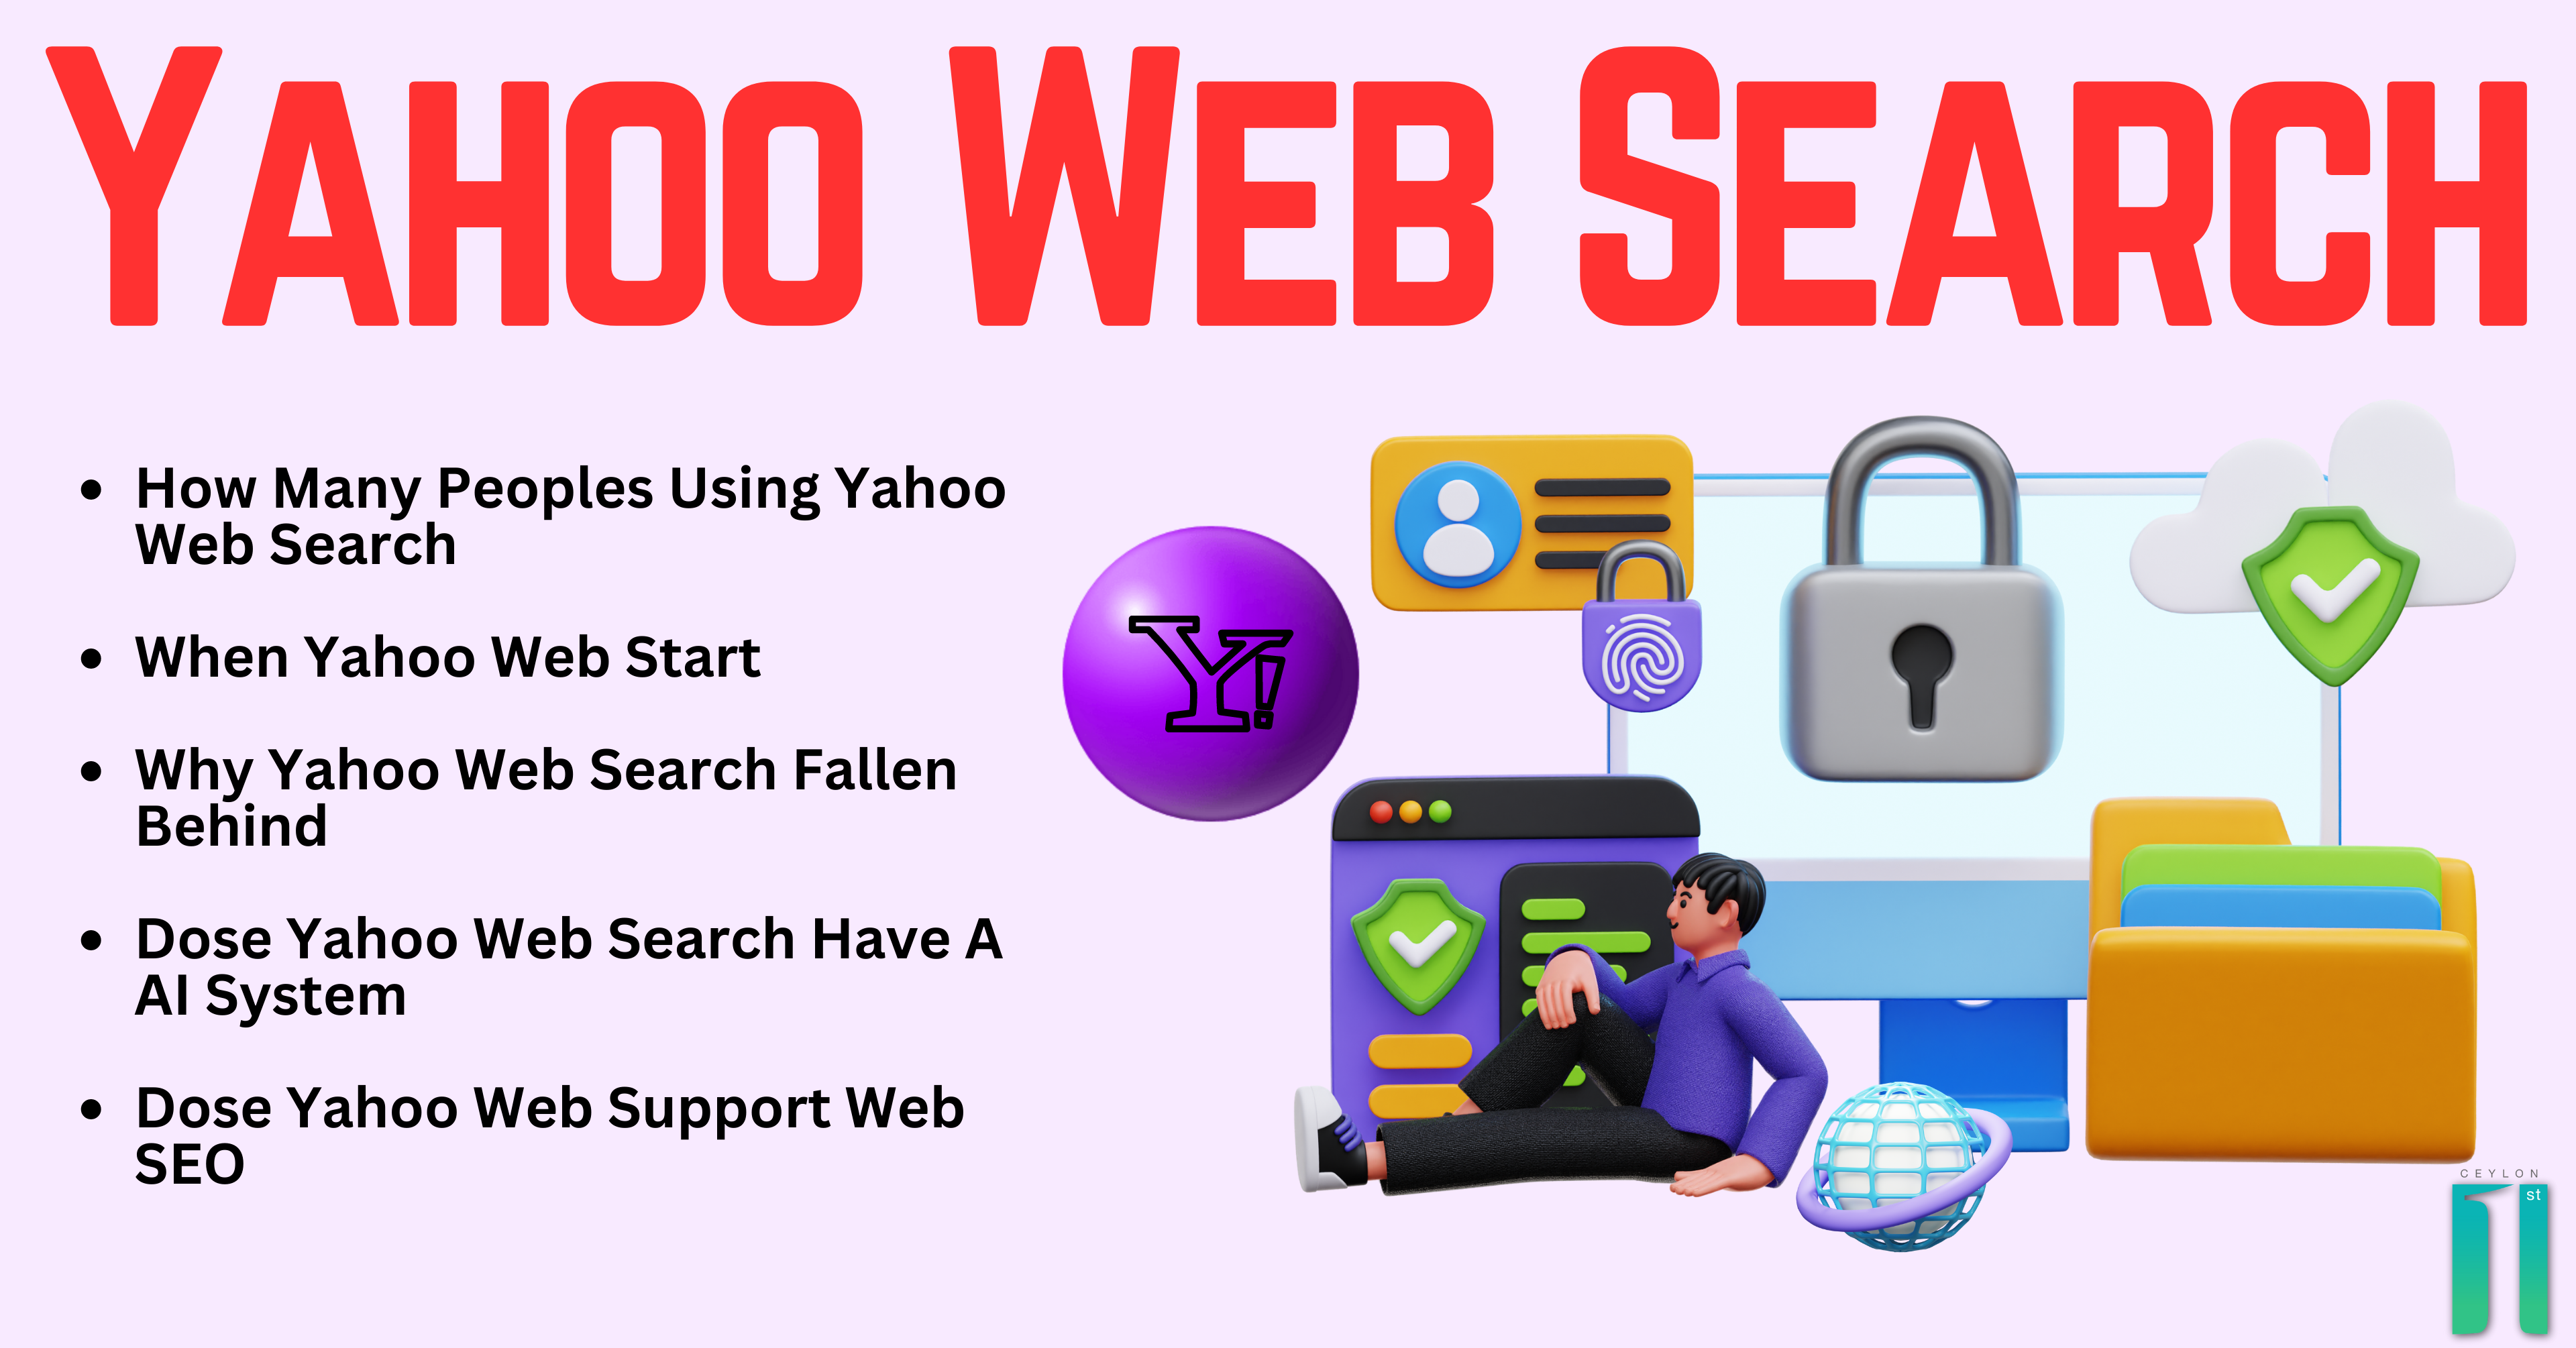 Yahoo Web Search